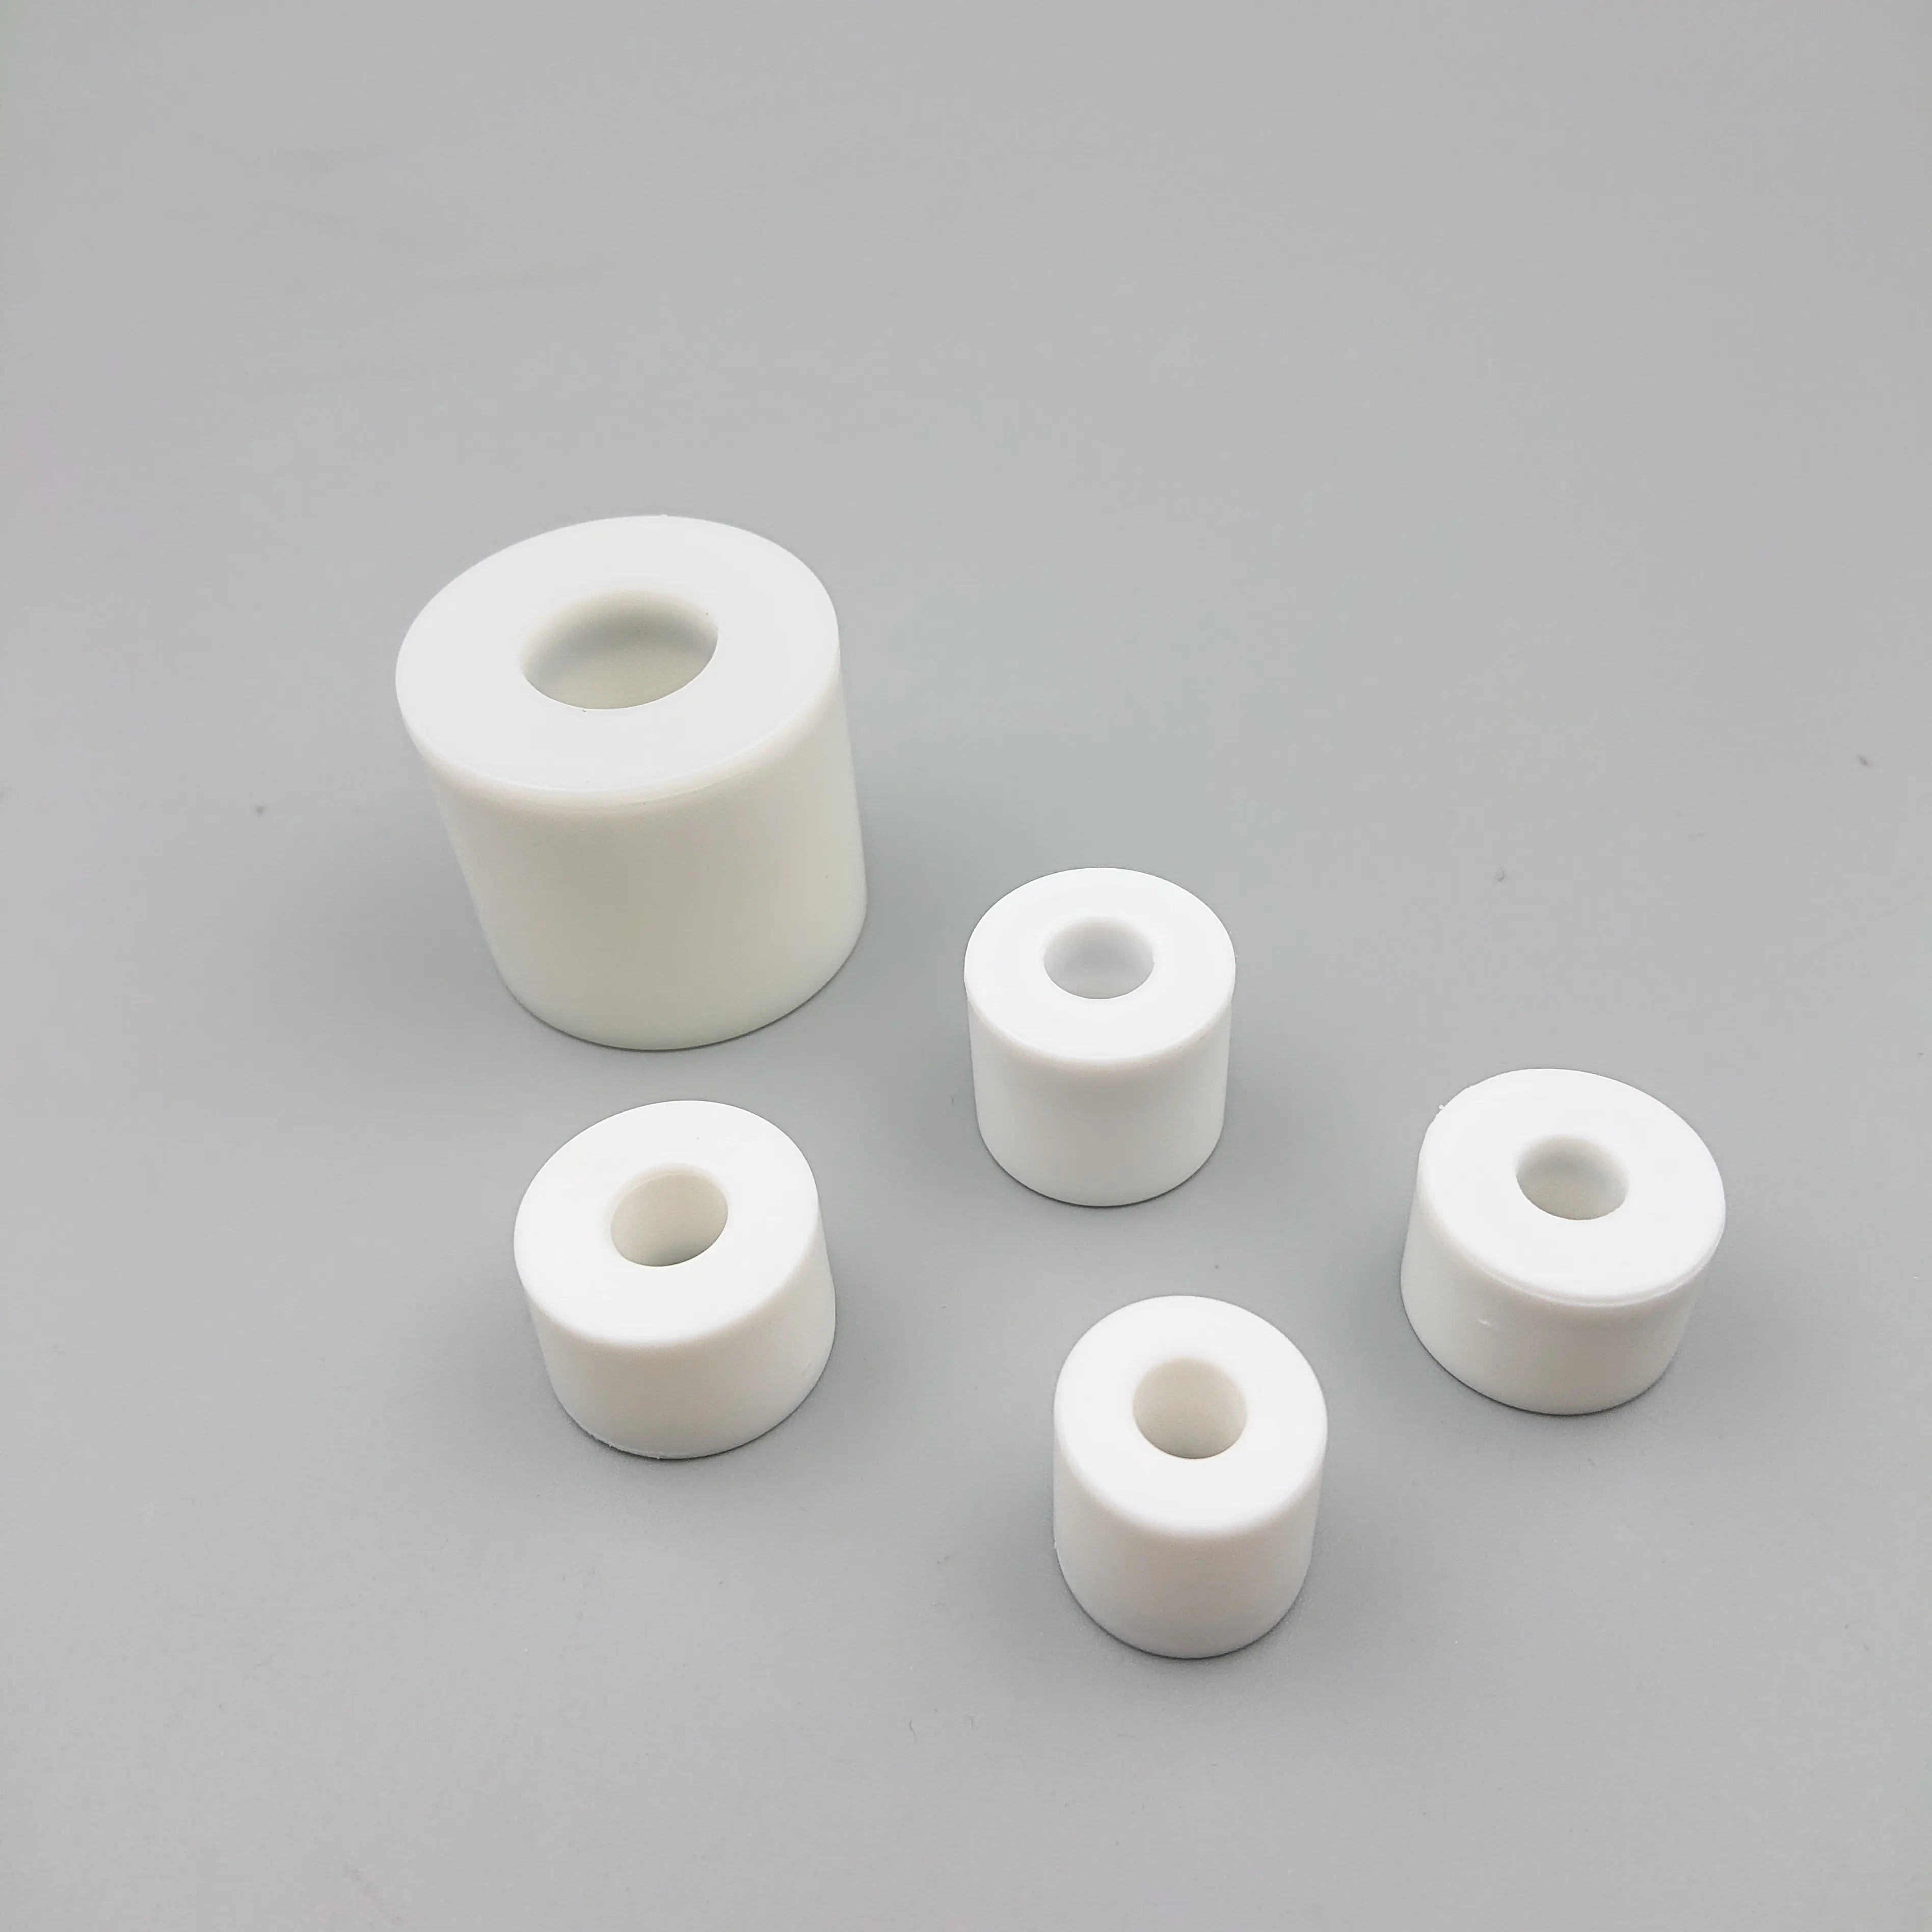 Magnetic White Plastic/Polypropylen/PP Floater/Floating/Float Ball For Float Switch/Level Sensor